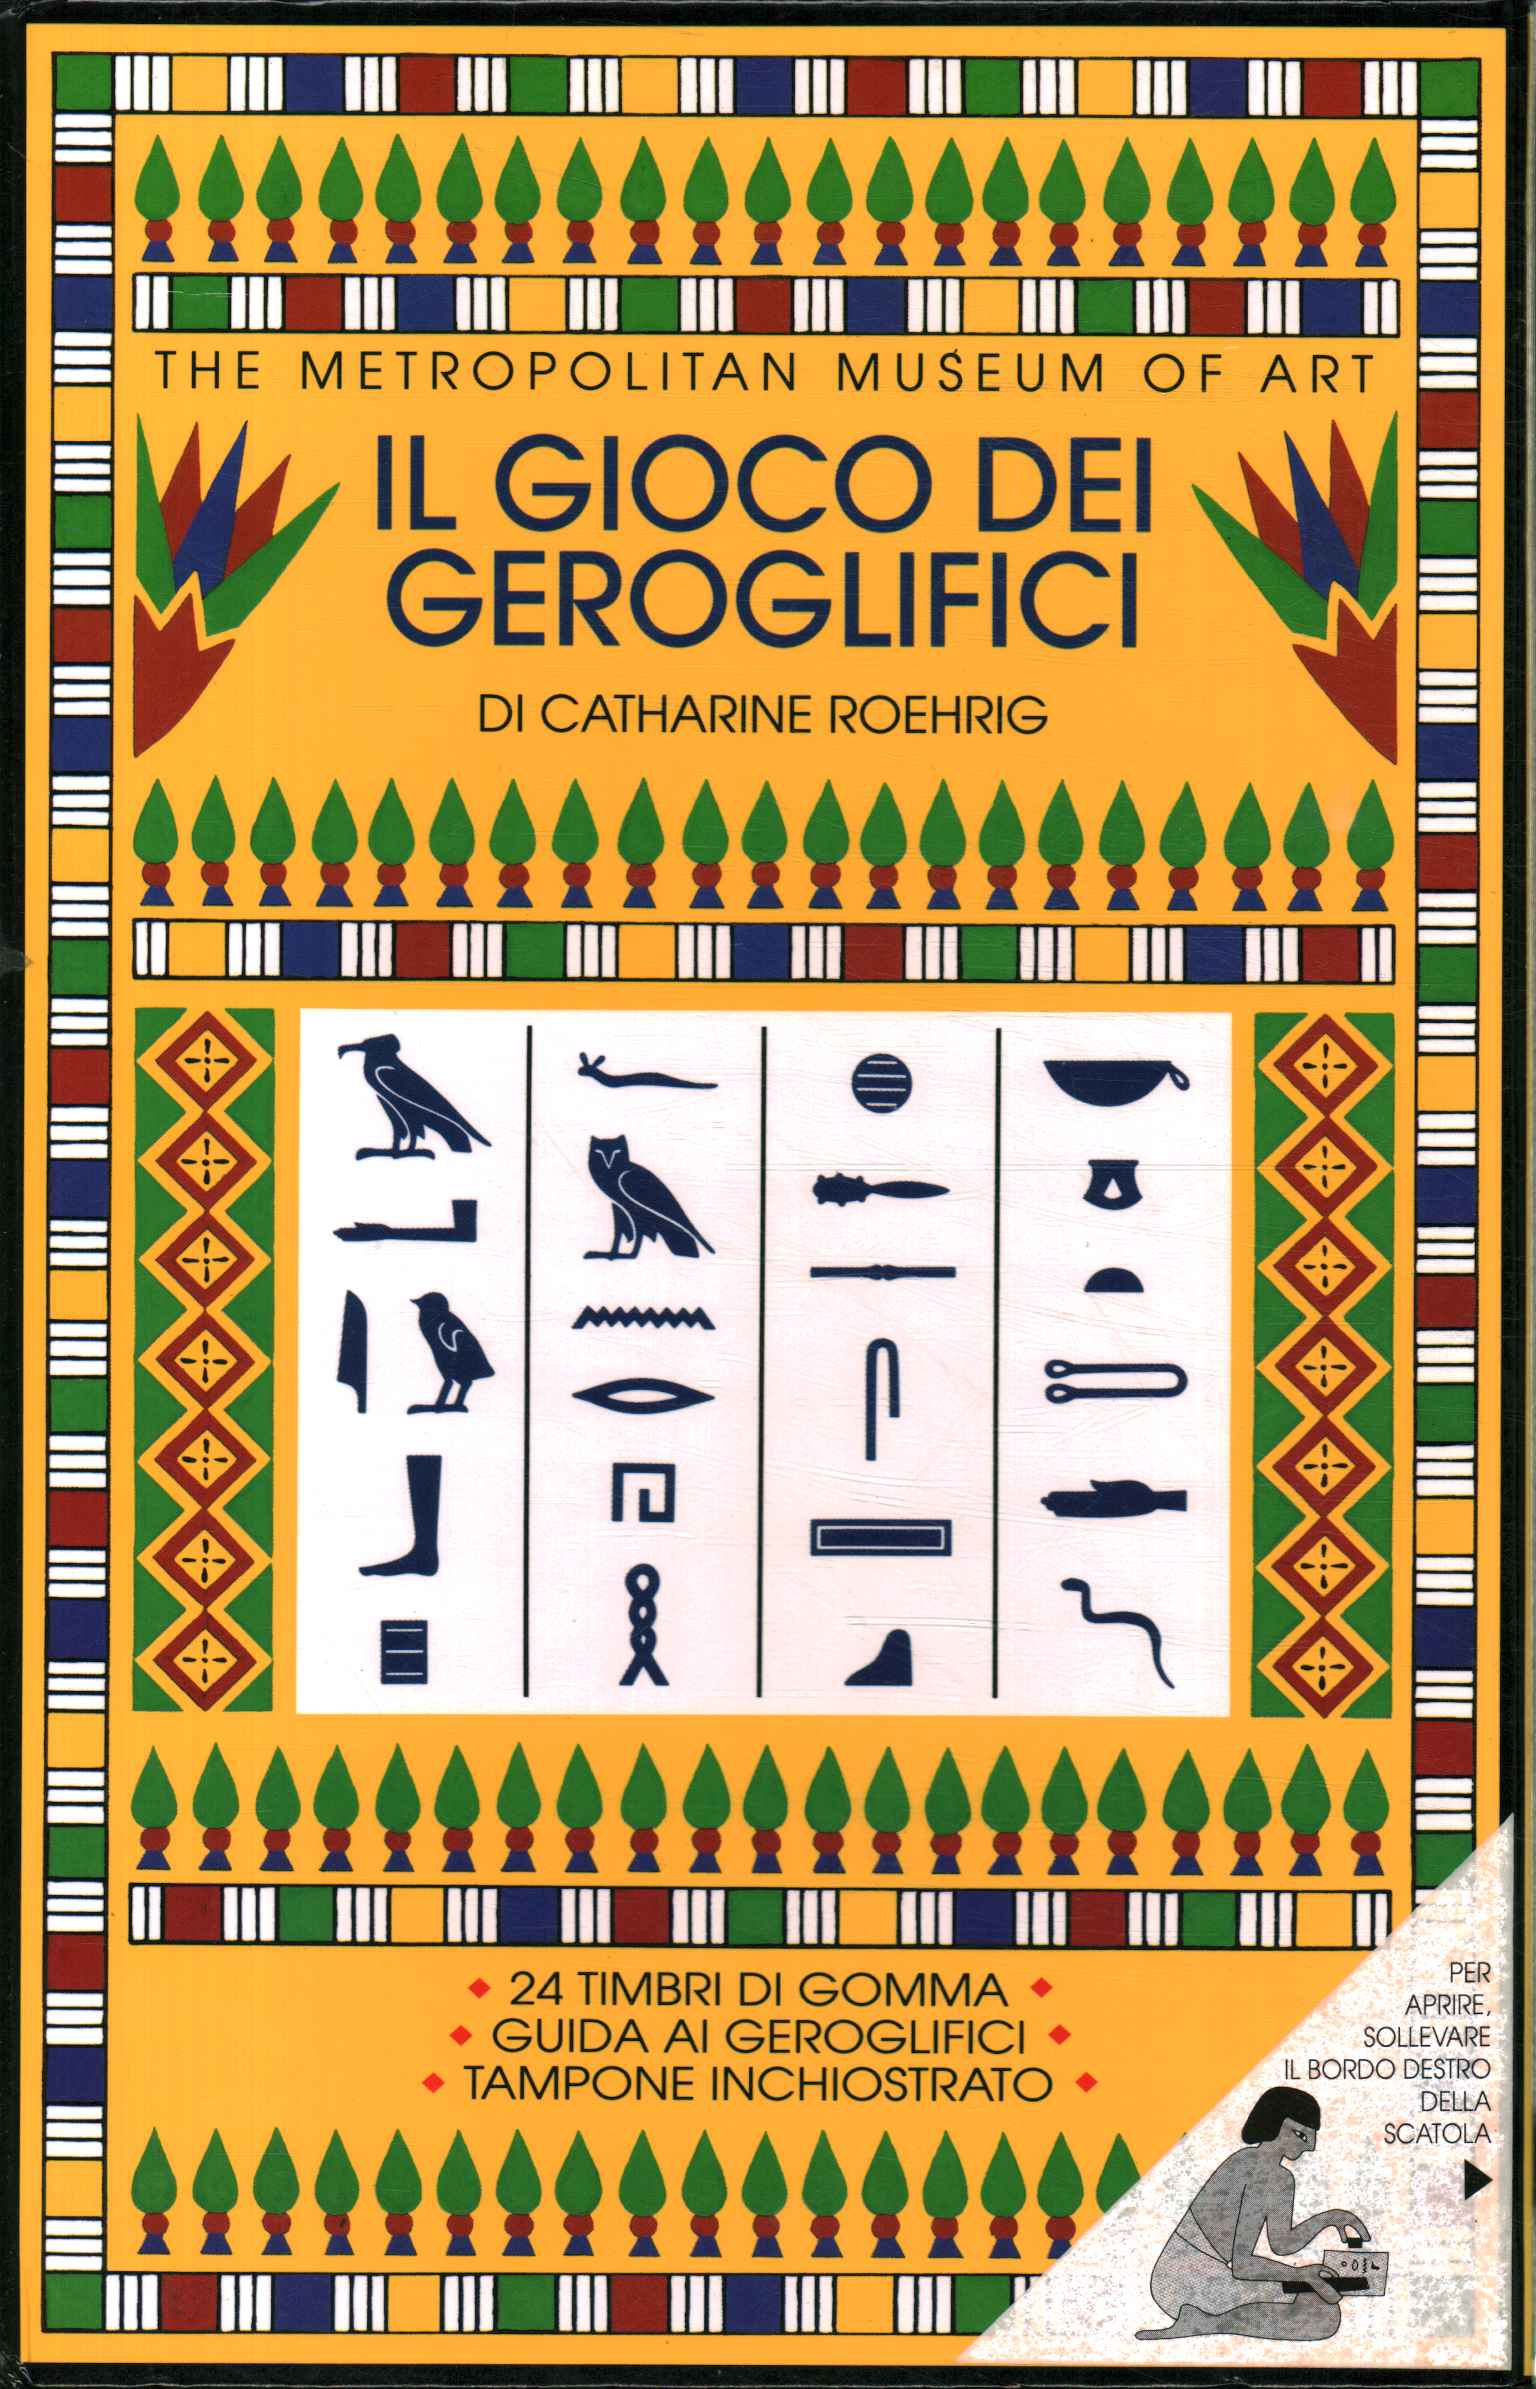 The hieroglyphics game